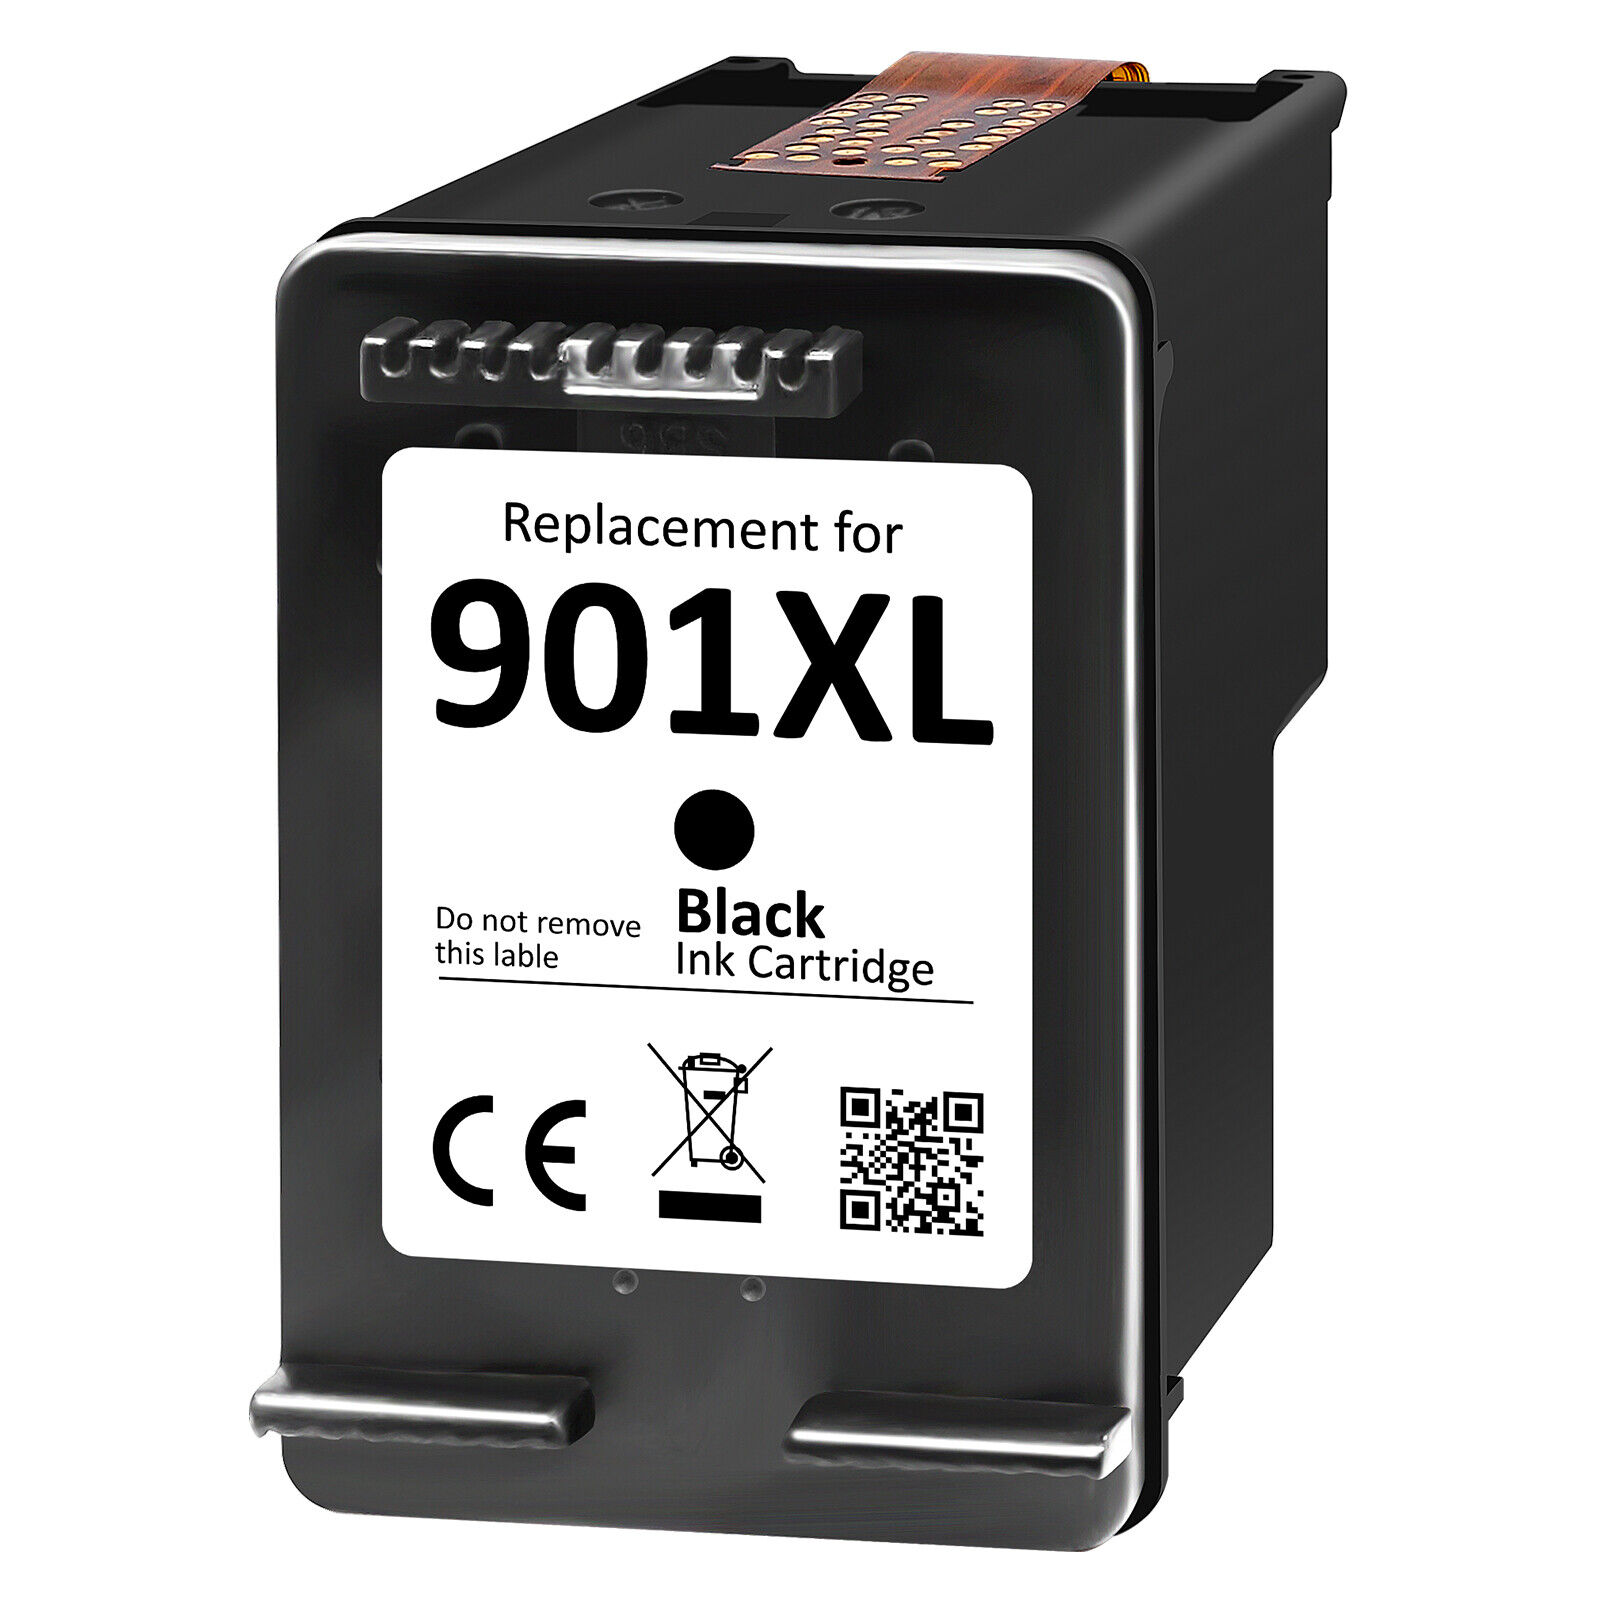 901XL Ink Cartridges For HP 901 Officejet 4500 J4540 J4550 J4580 J4640 Printers